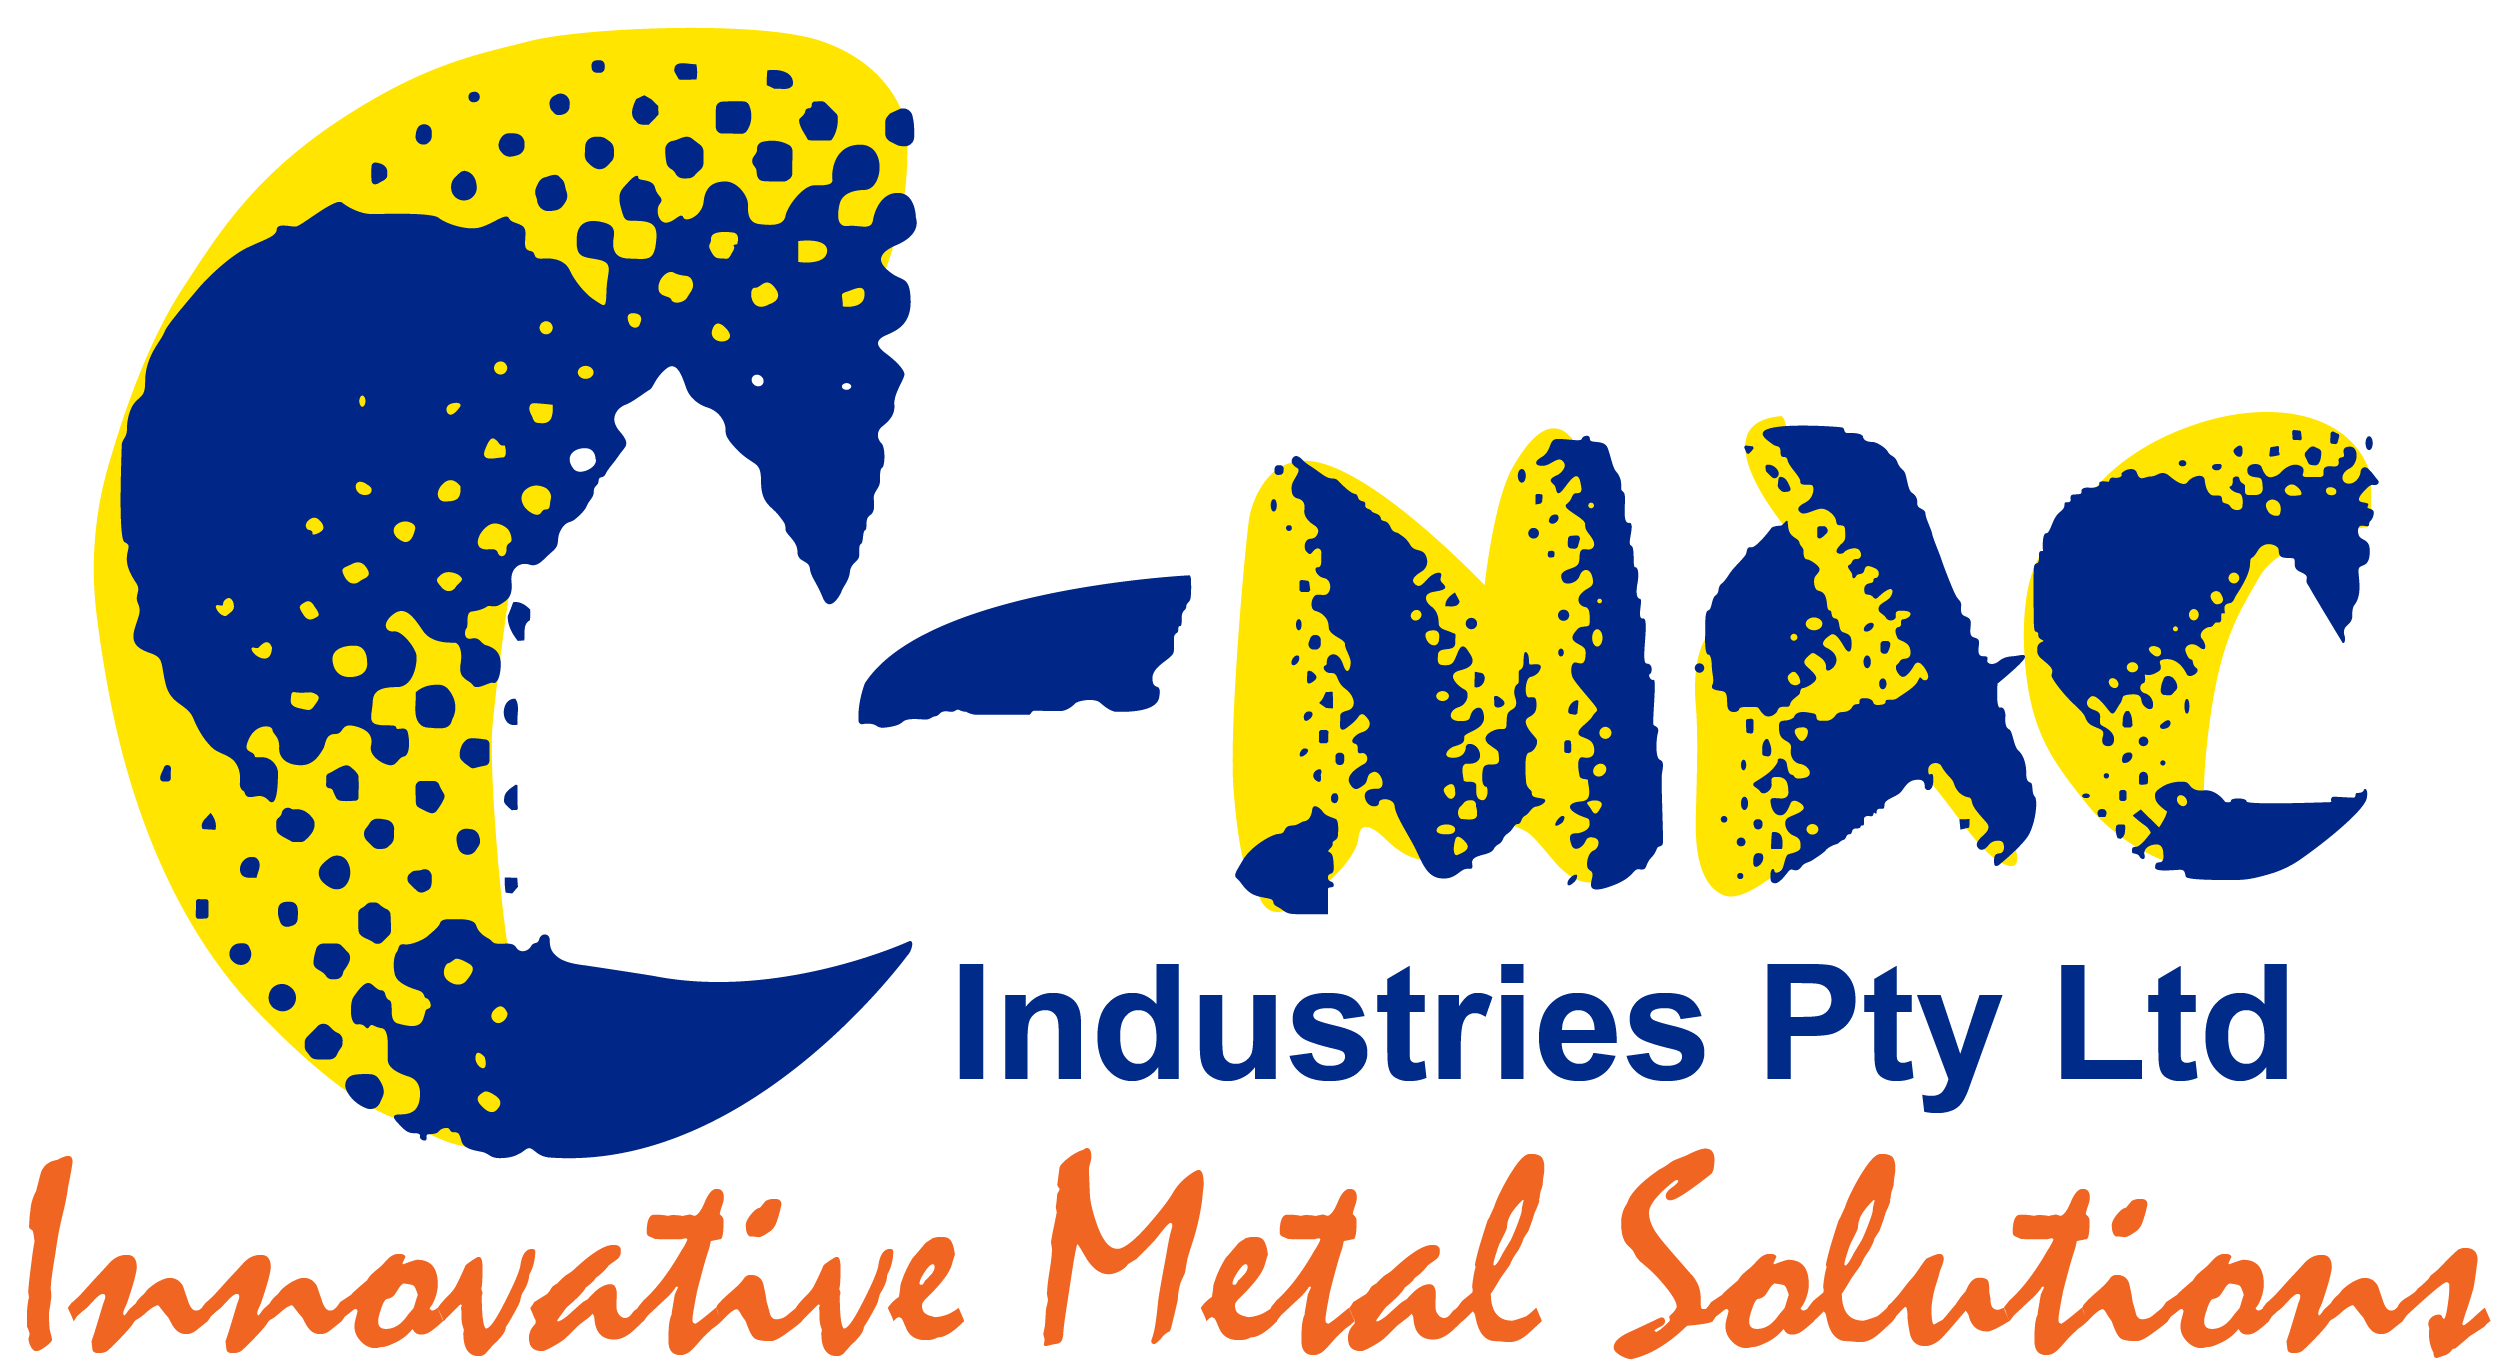 C-Mac Industries Pty Ltd logo